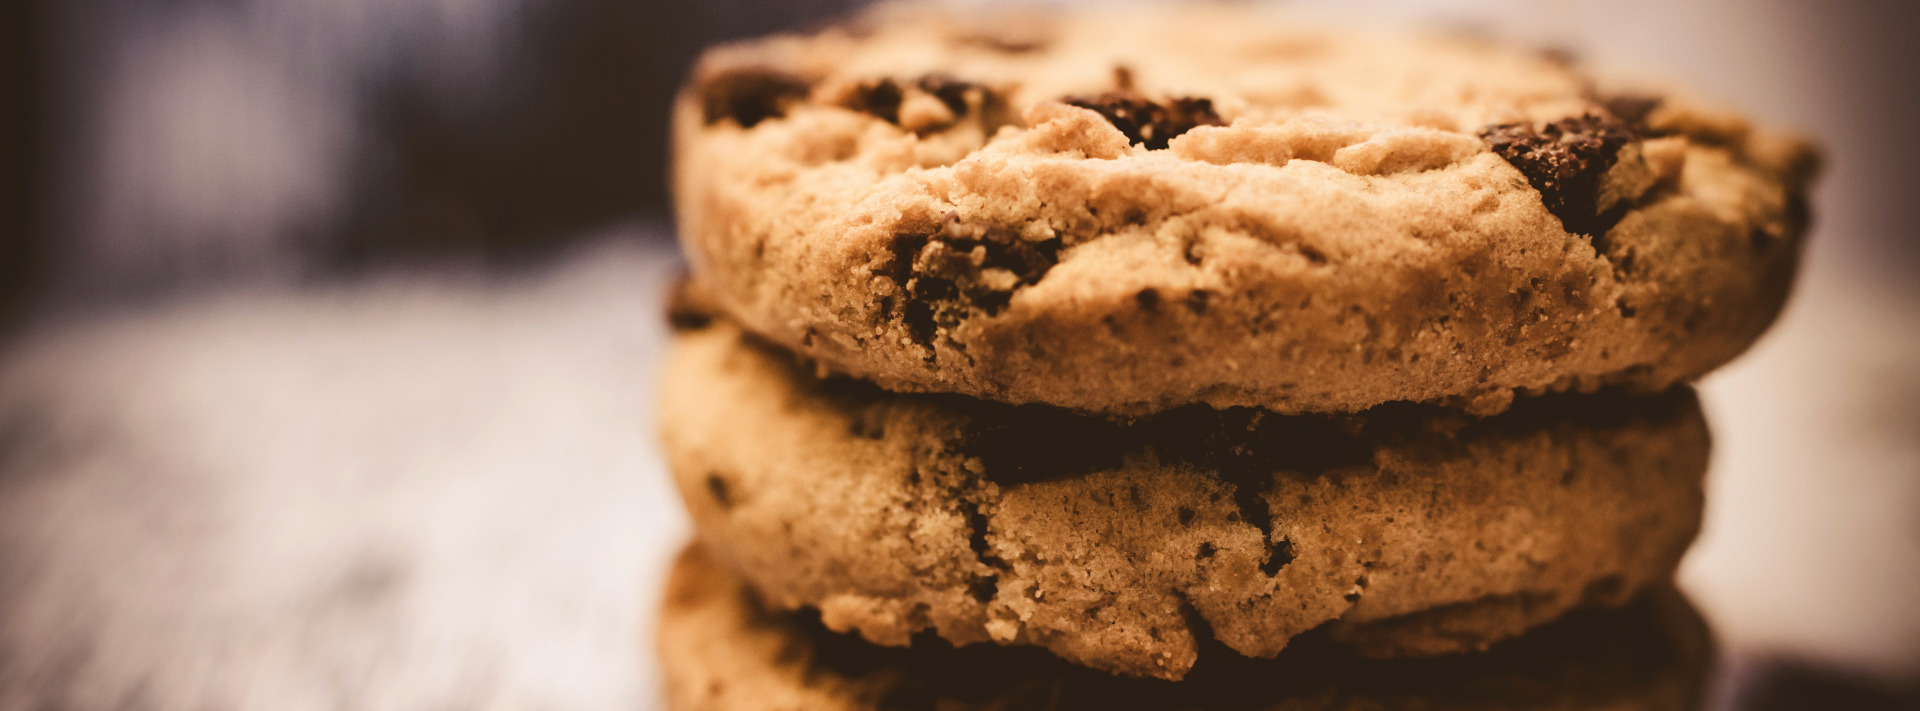 Cookie-tiers